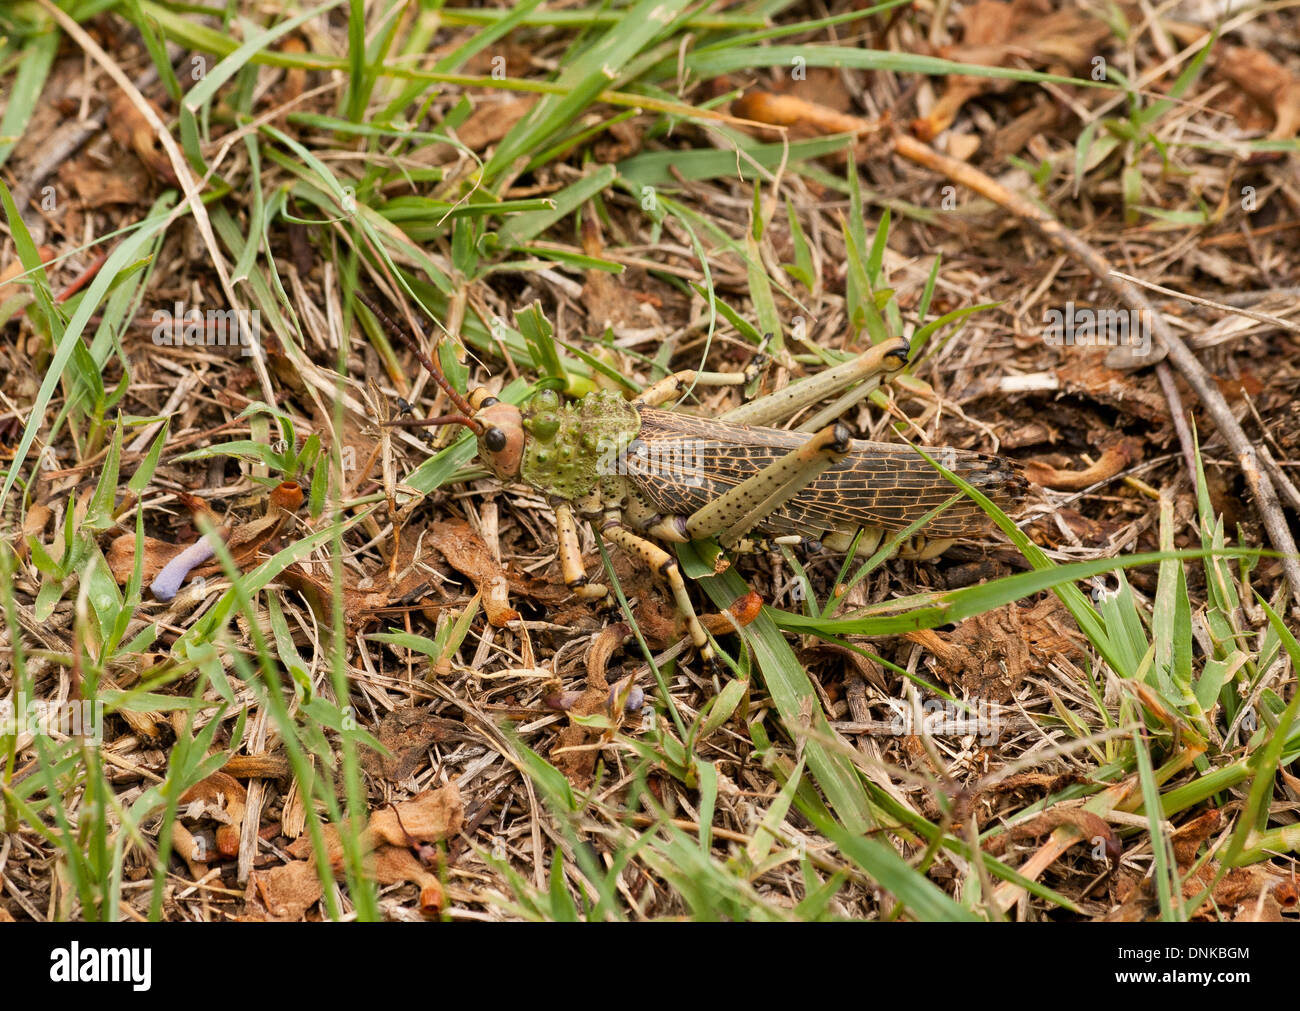 Phymateus viridipes, aka Green Milkweed Locust or African Bush Grasshopper camouflaged in grass in Isandlwana, South Africa Stock Photo